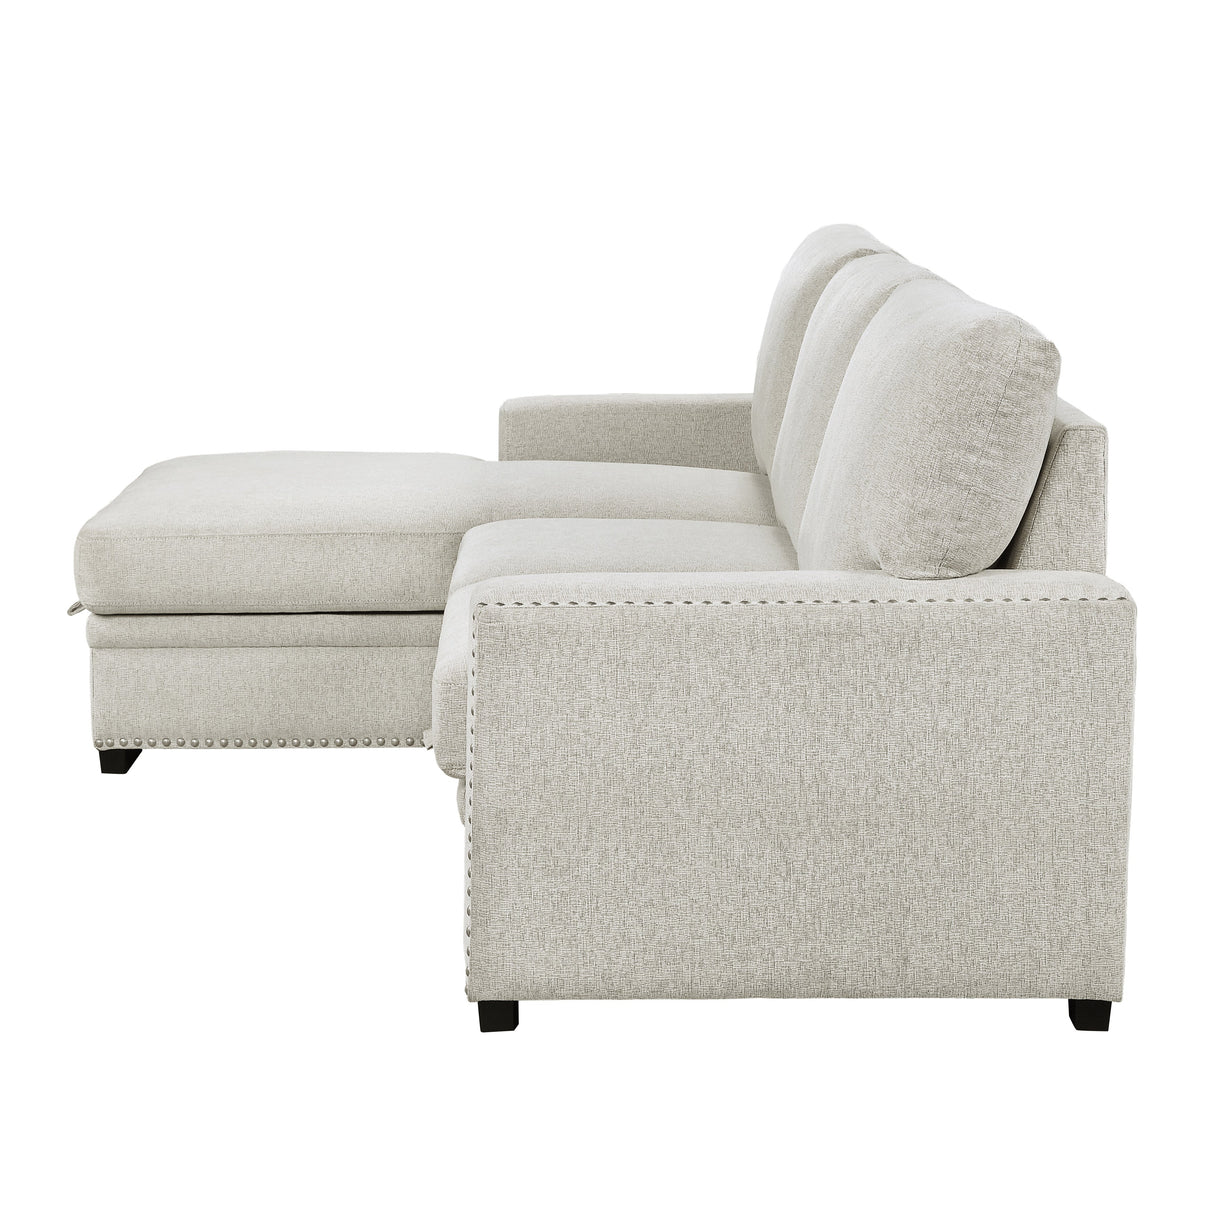 Morelia Beige LAF Storage Sleeper Sofa Chaise